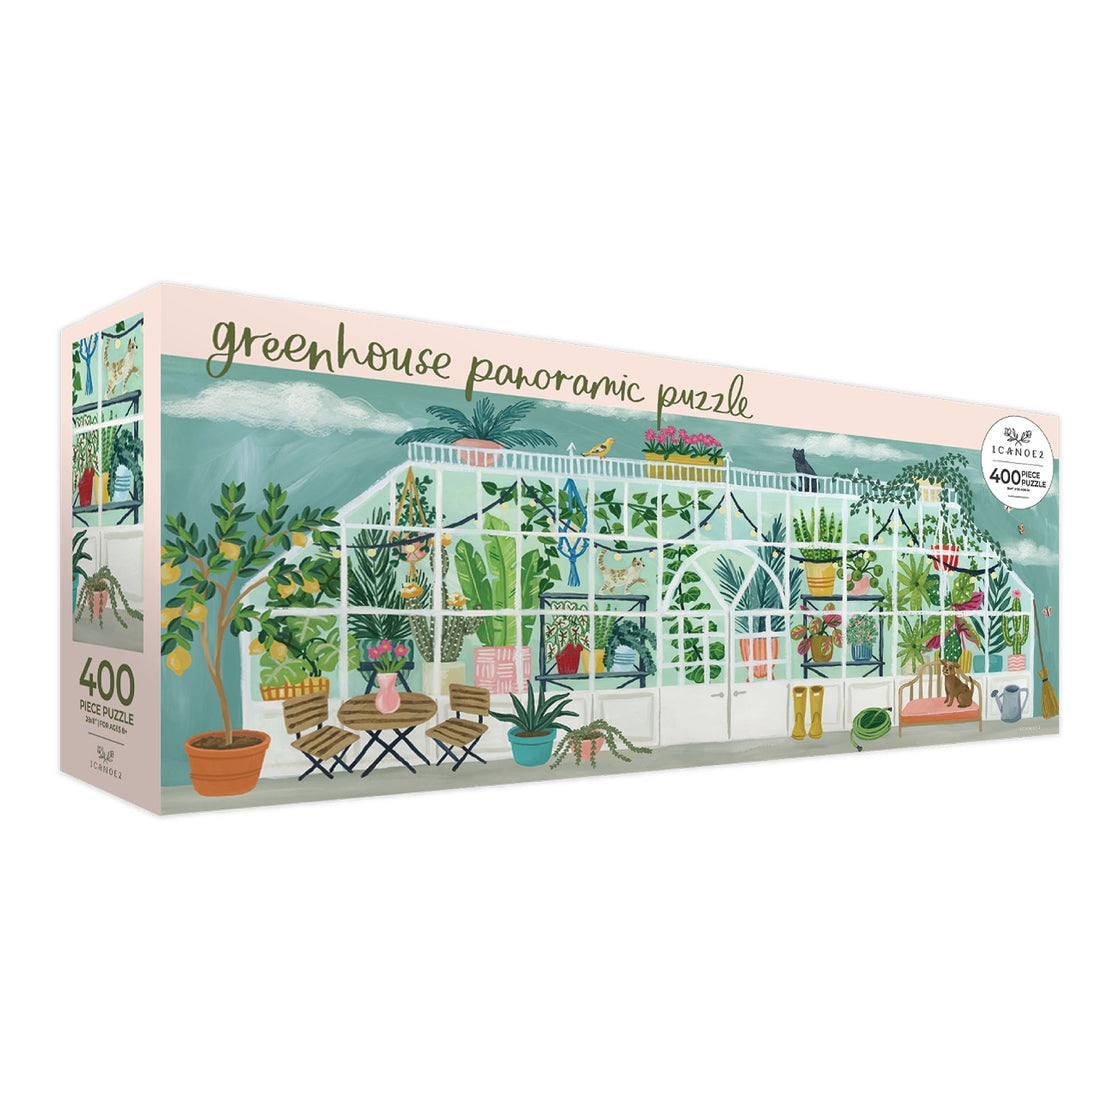 Greenhouse Panoramic Puzzle